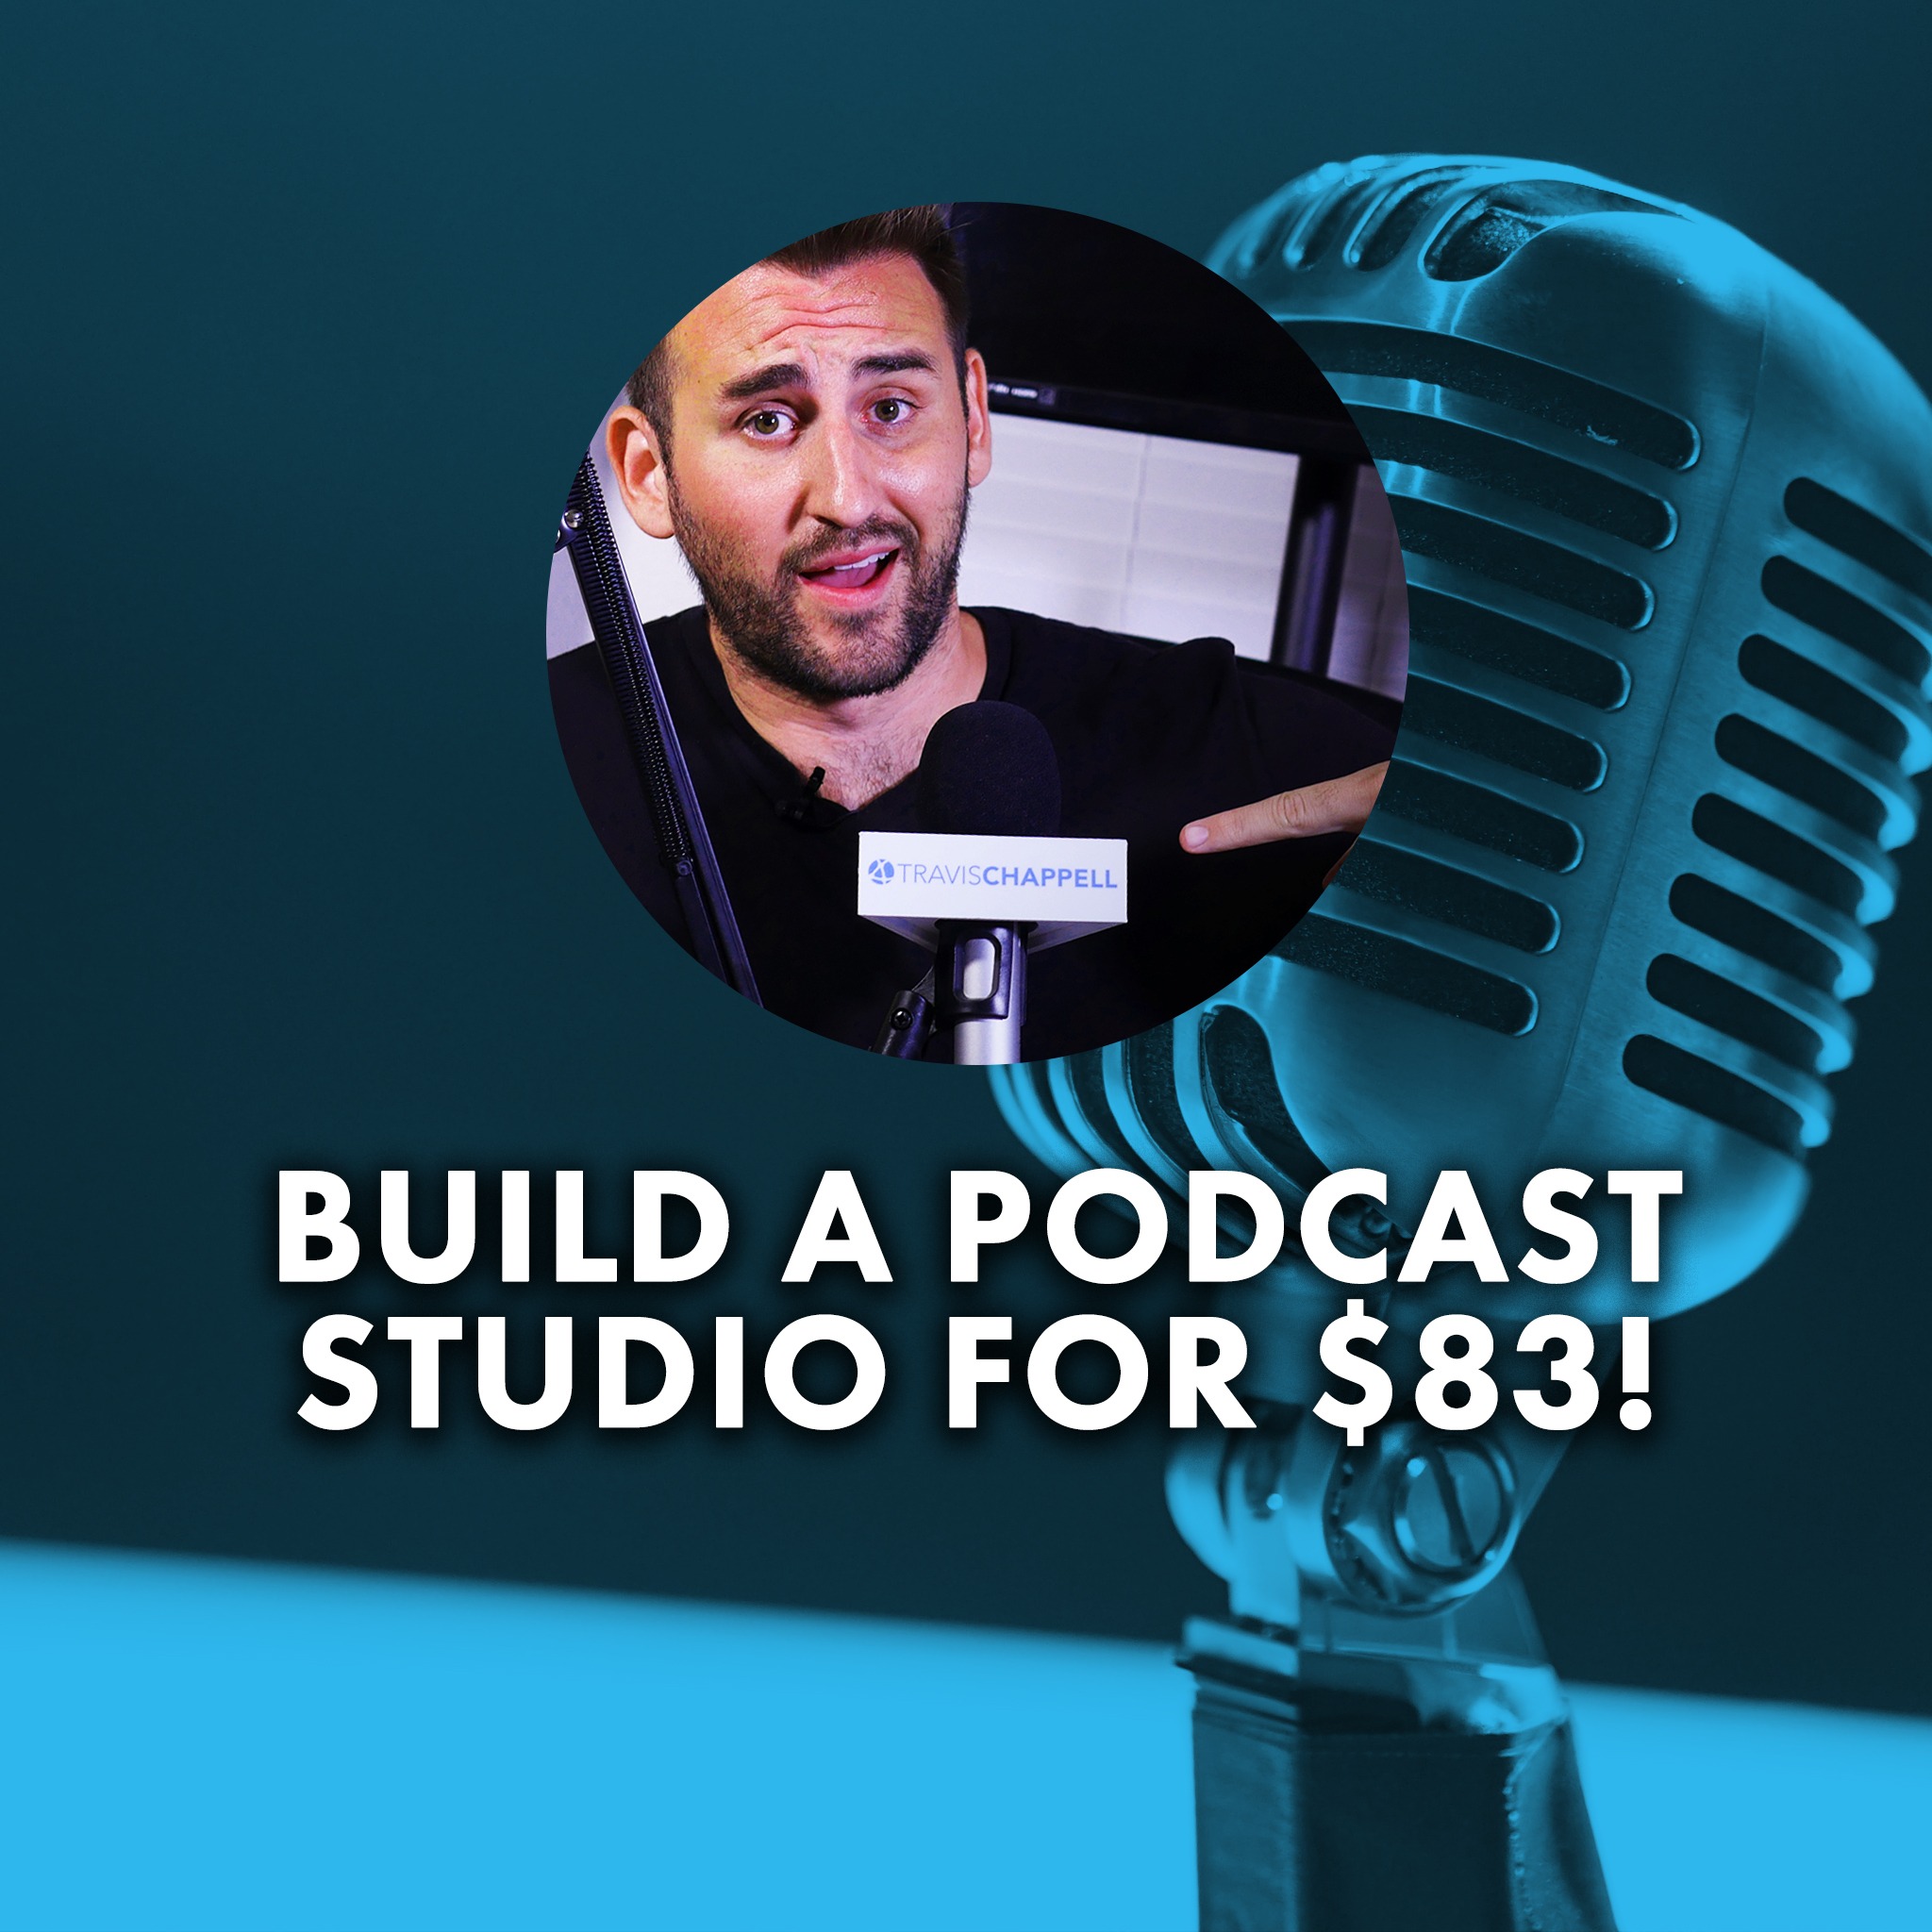 Build a Podcast Studio for $83!